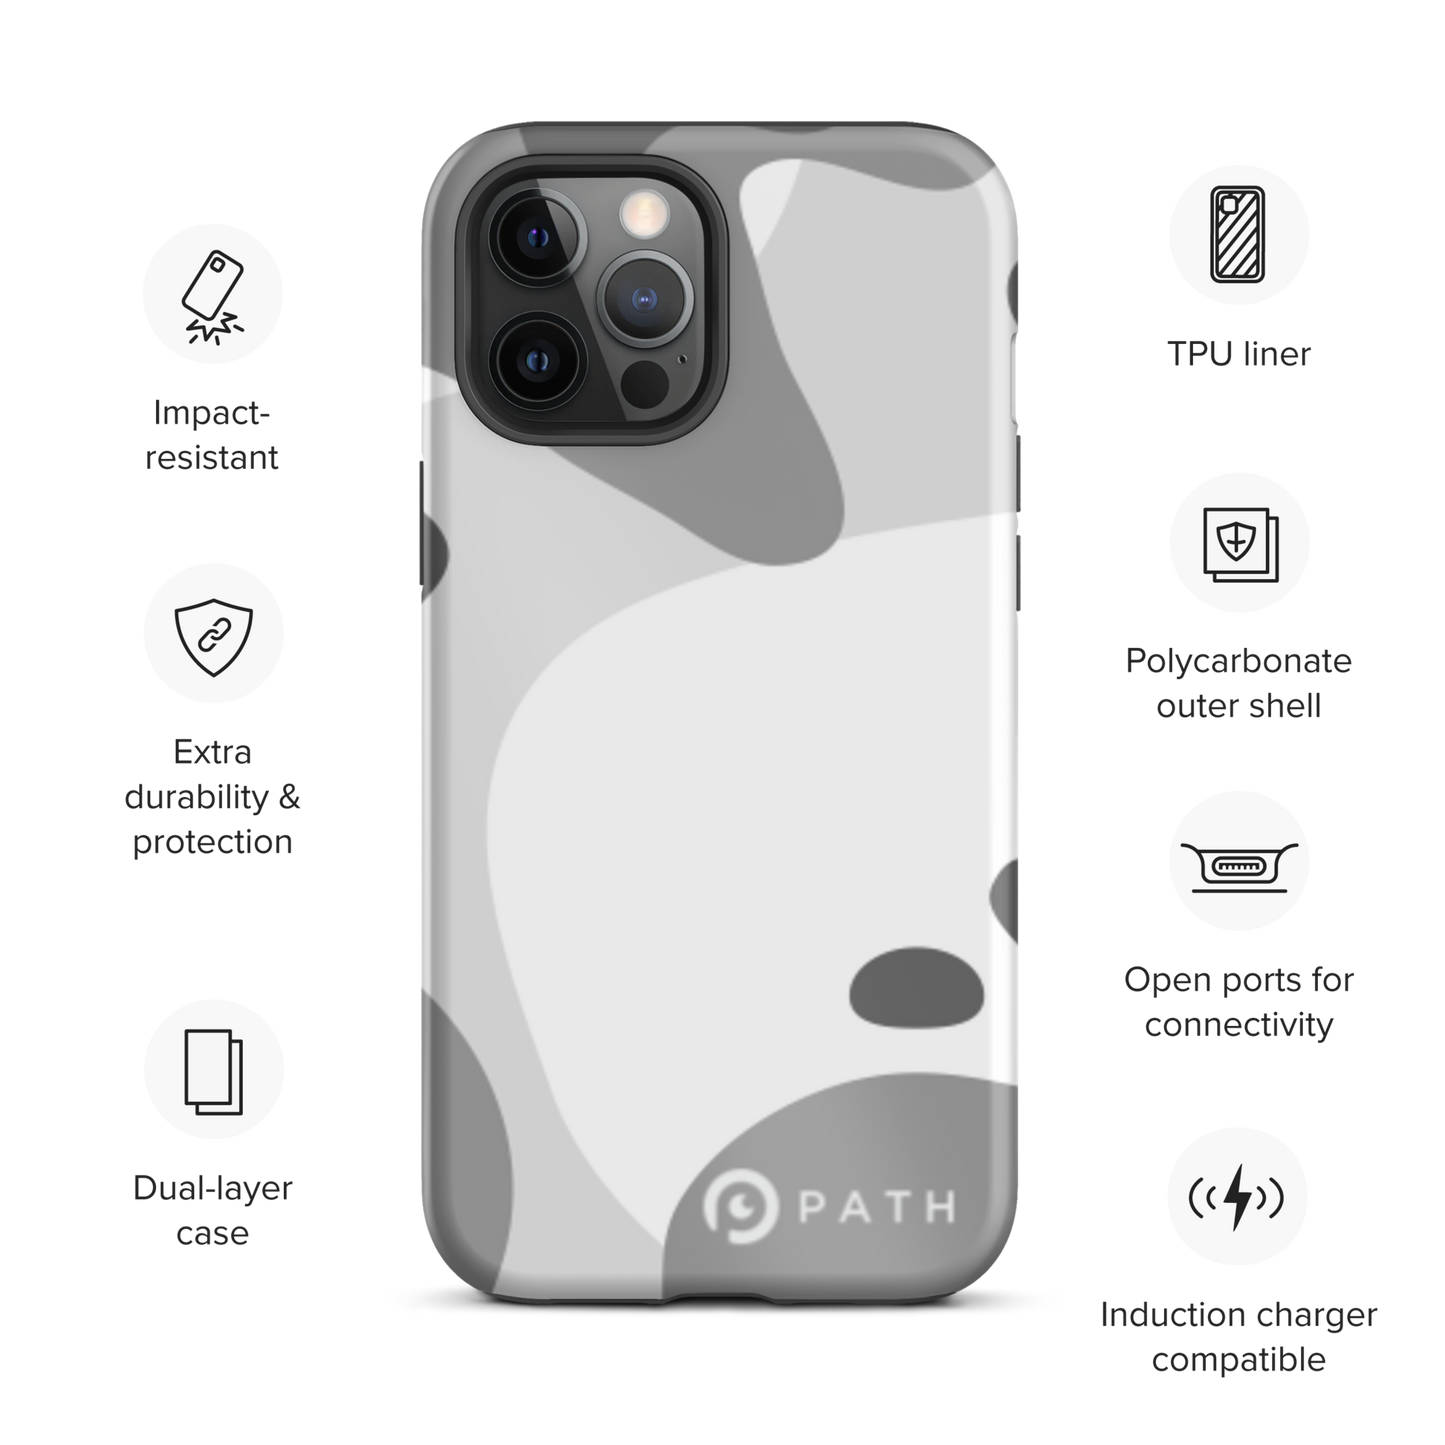 Path iPhone case